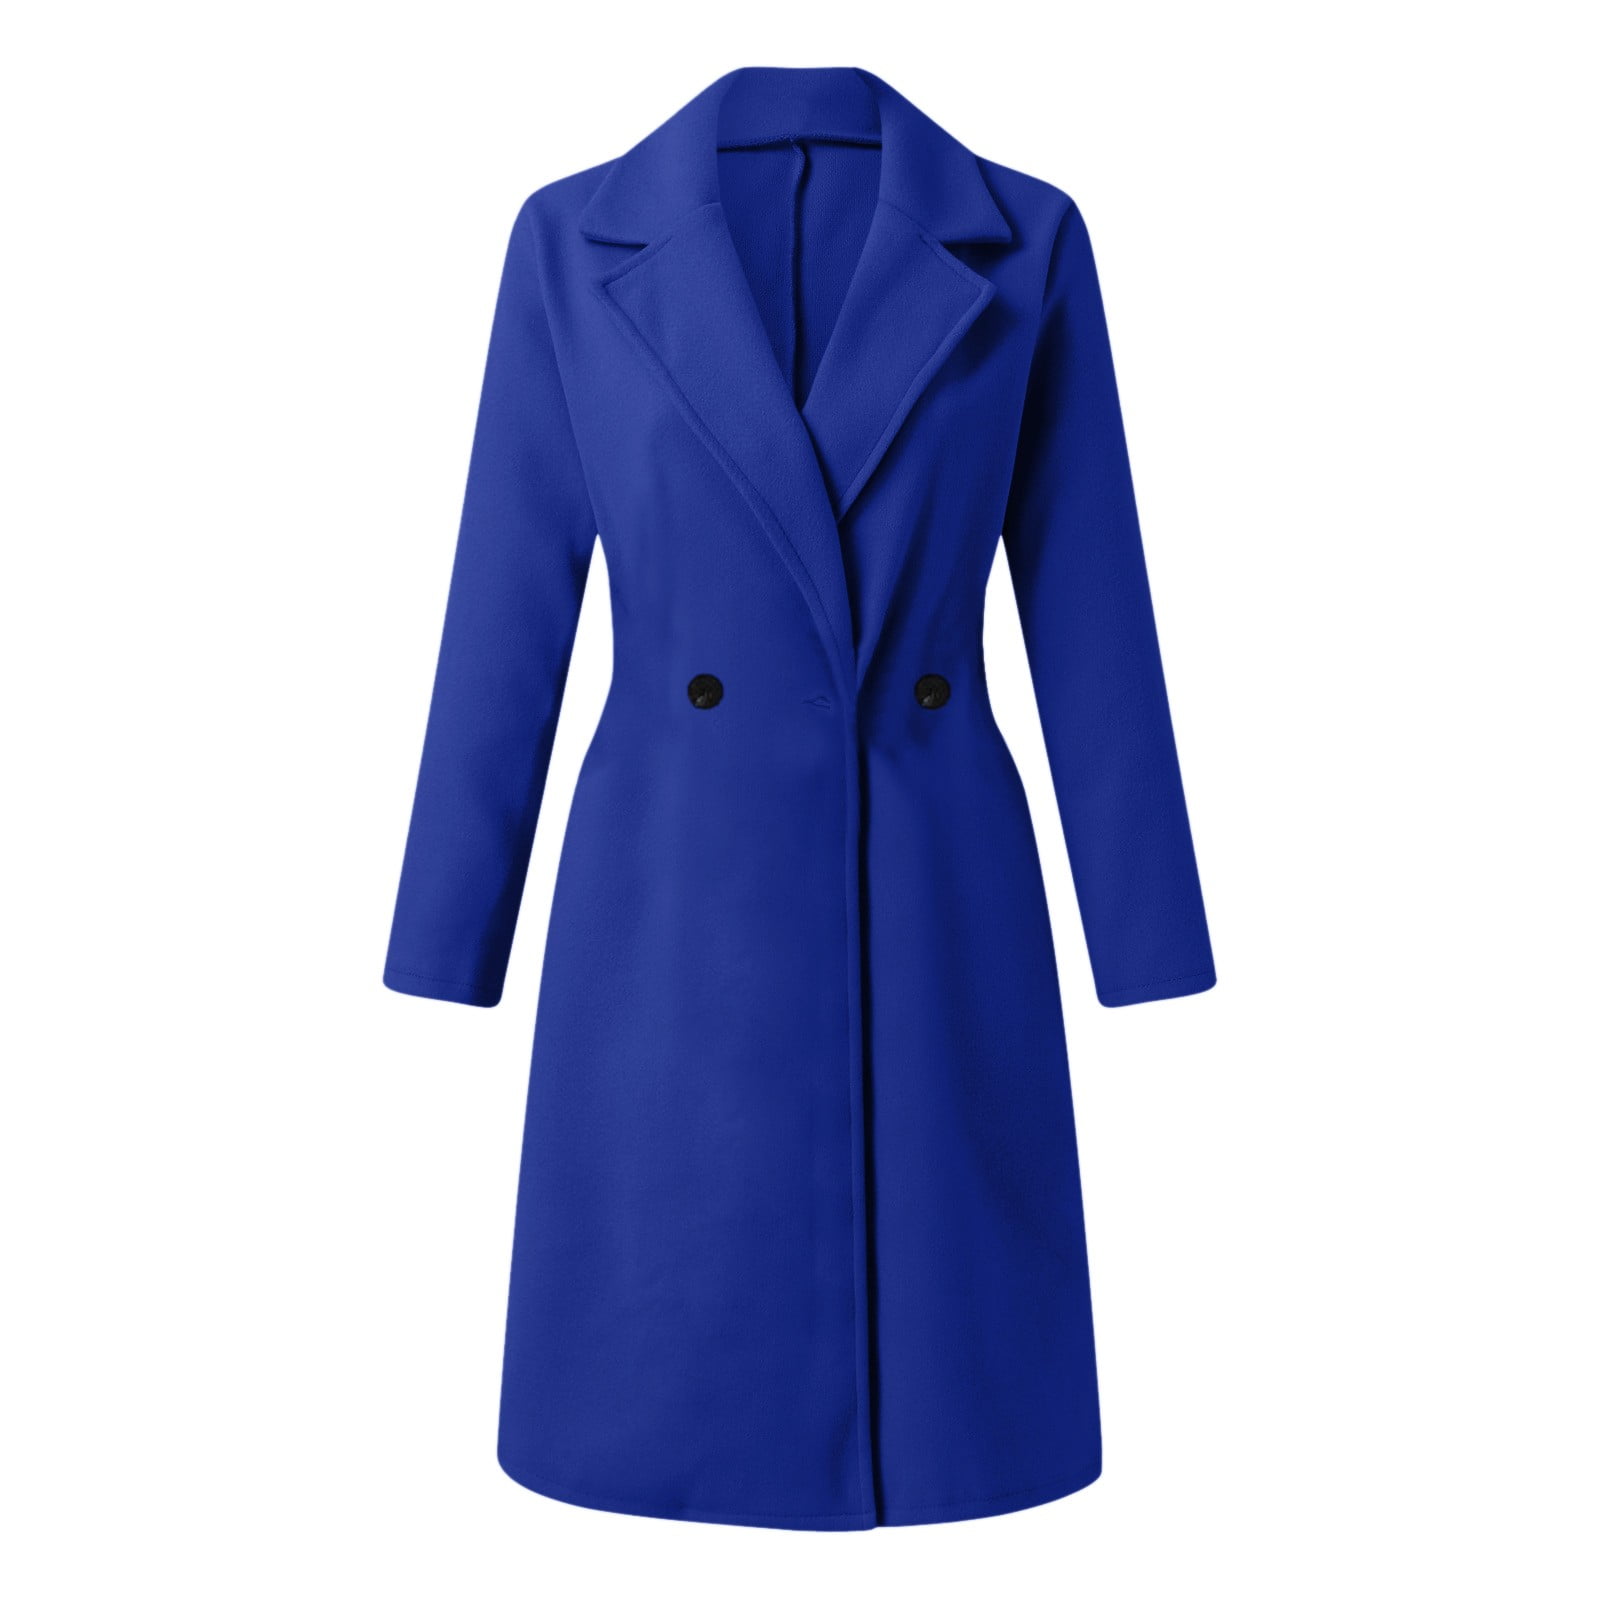 Length Women's Casual V Neck Coat Button Long Sleeve Plaid Shirt Solid Color Jacket Windproof Jacket Outdoor Coat Slim Fit Outwear - Walmart.com